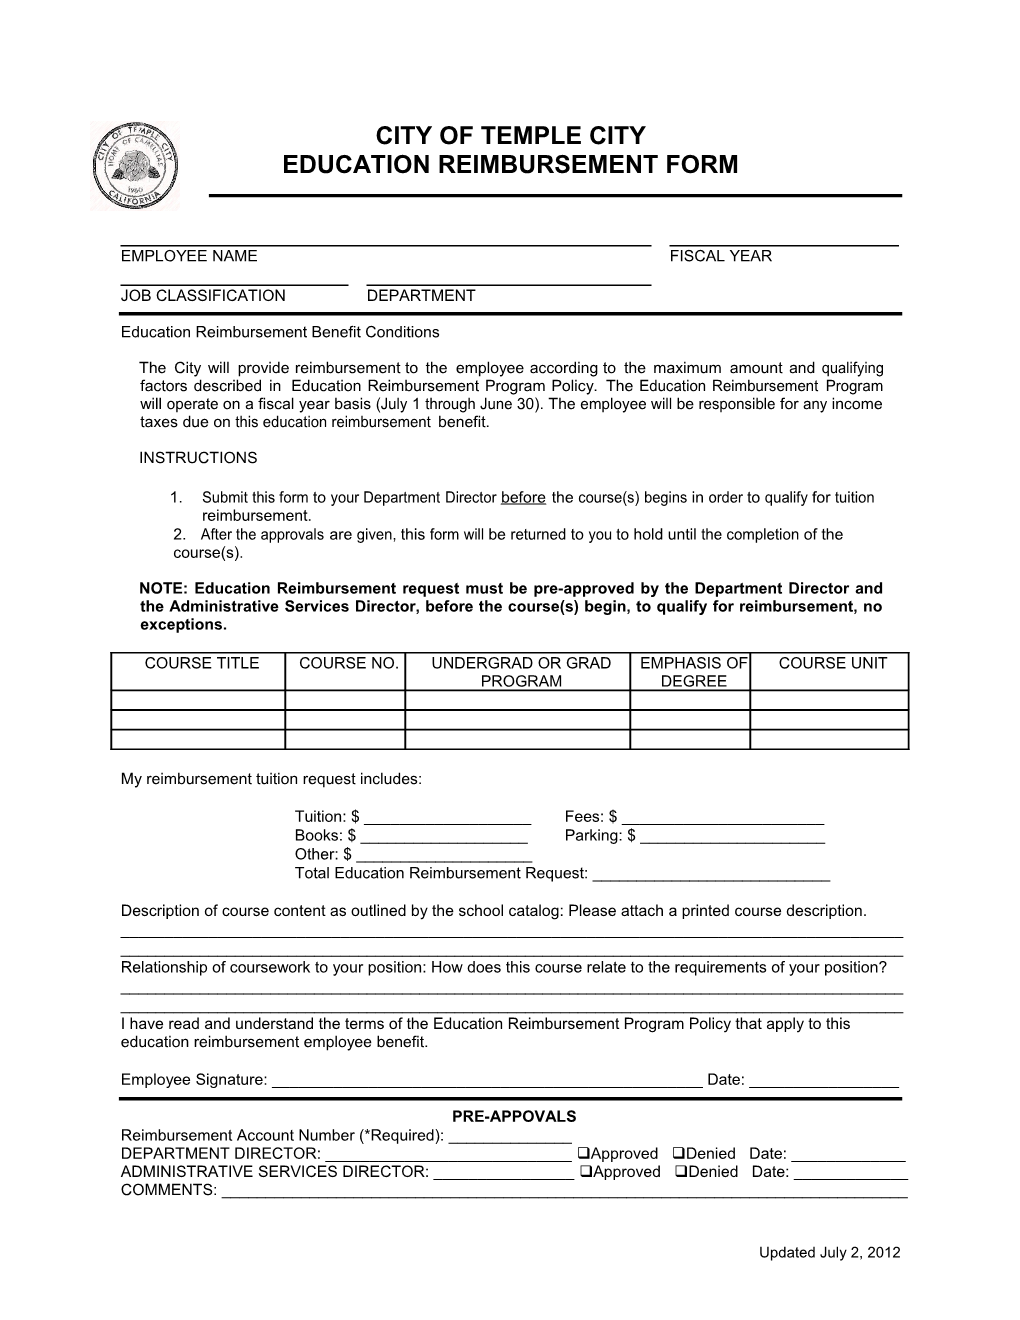 Education Reimbursement Form